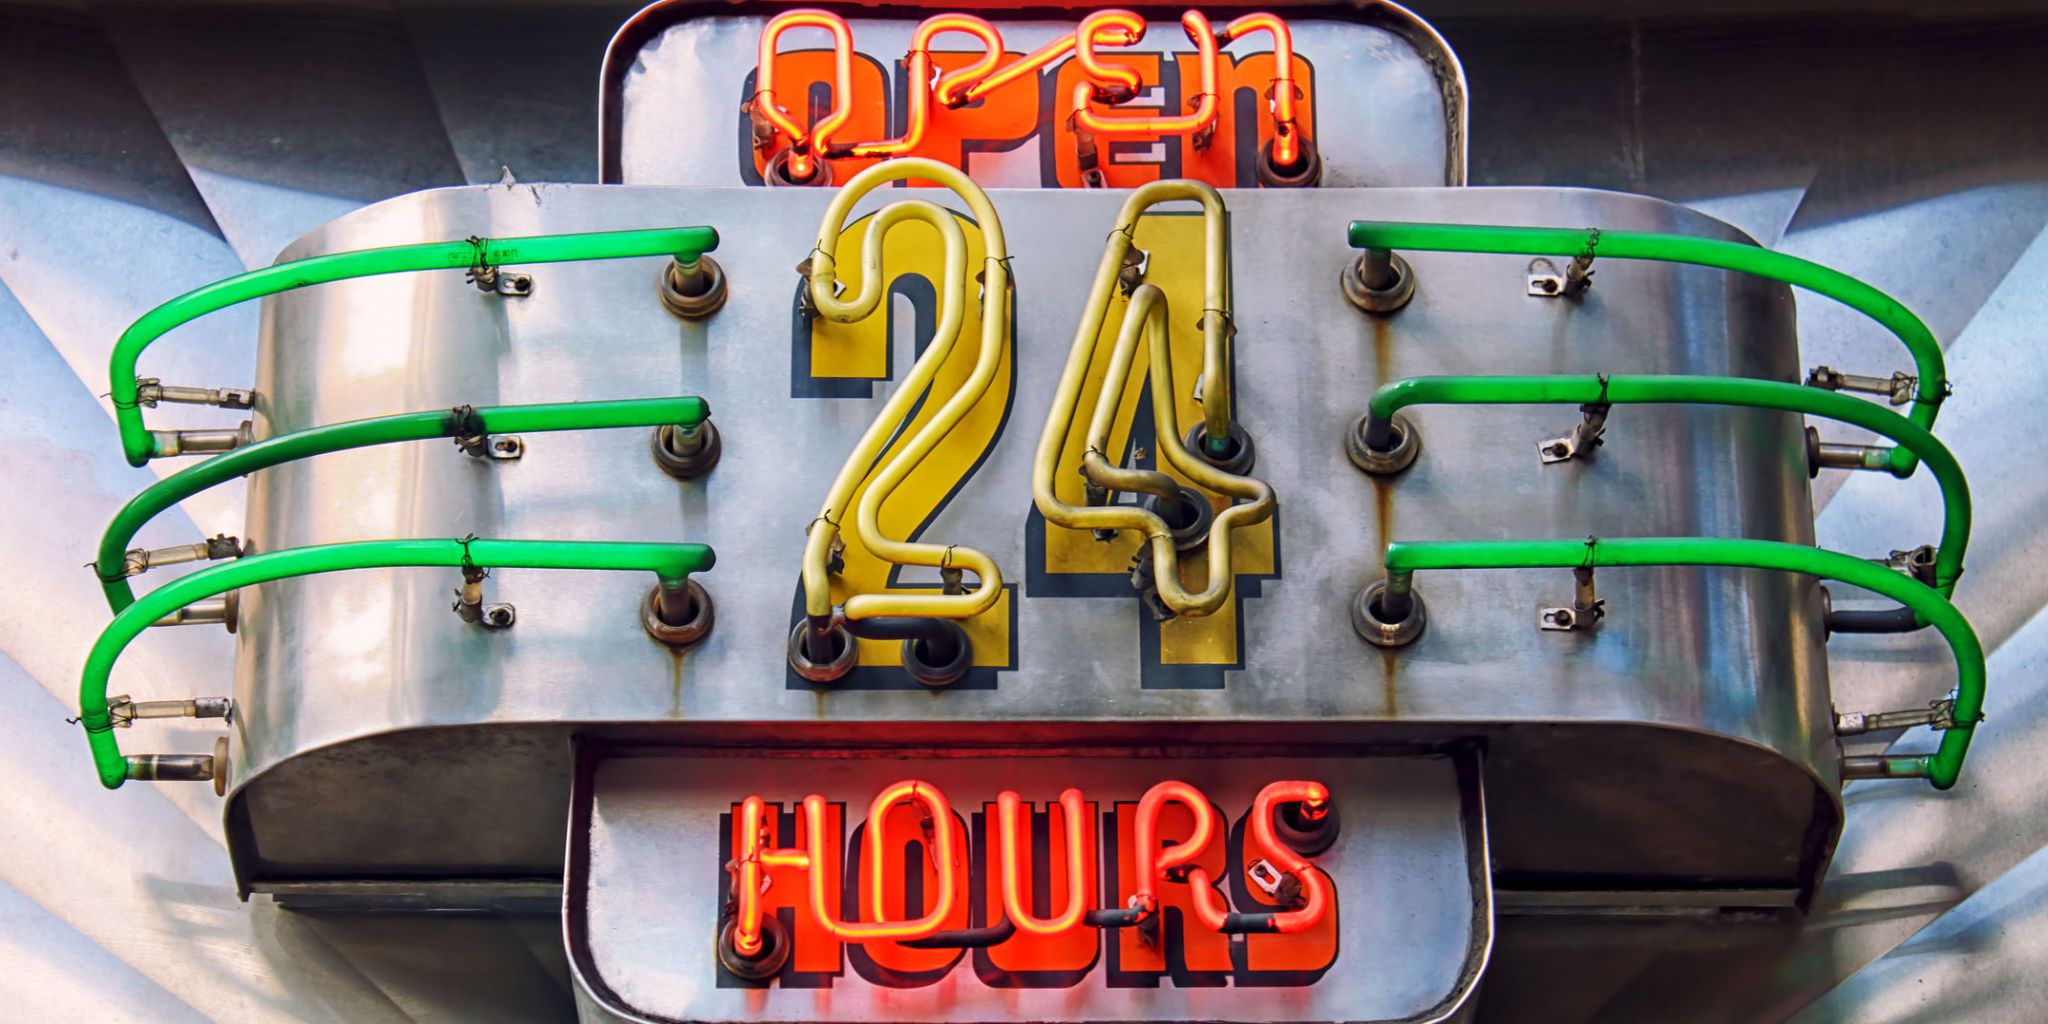 24 hour restaurants dallas